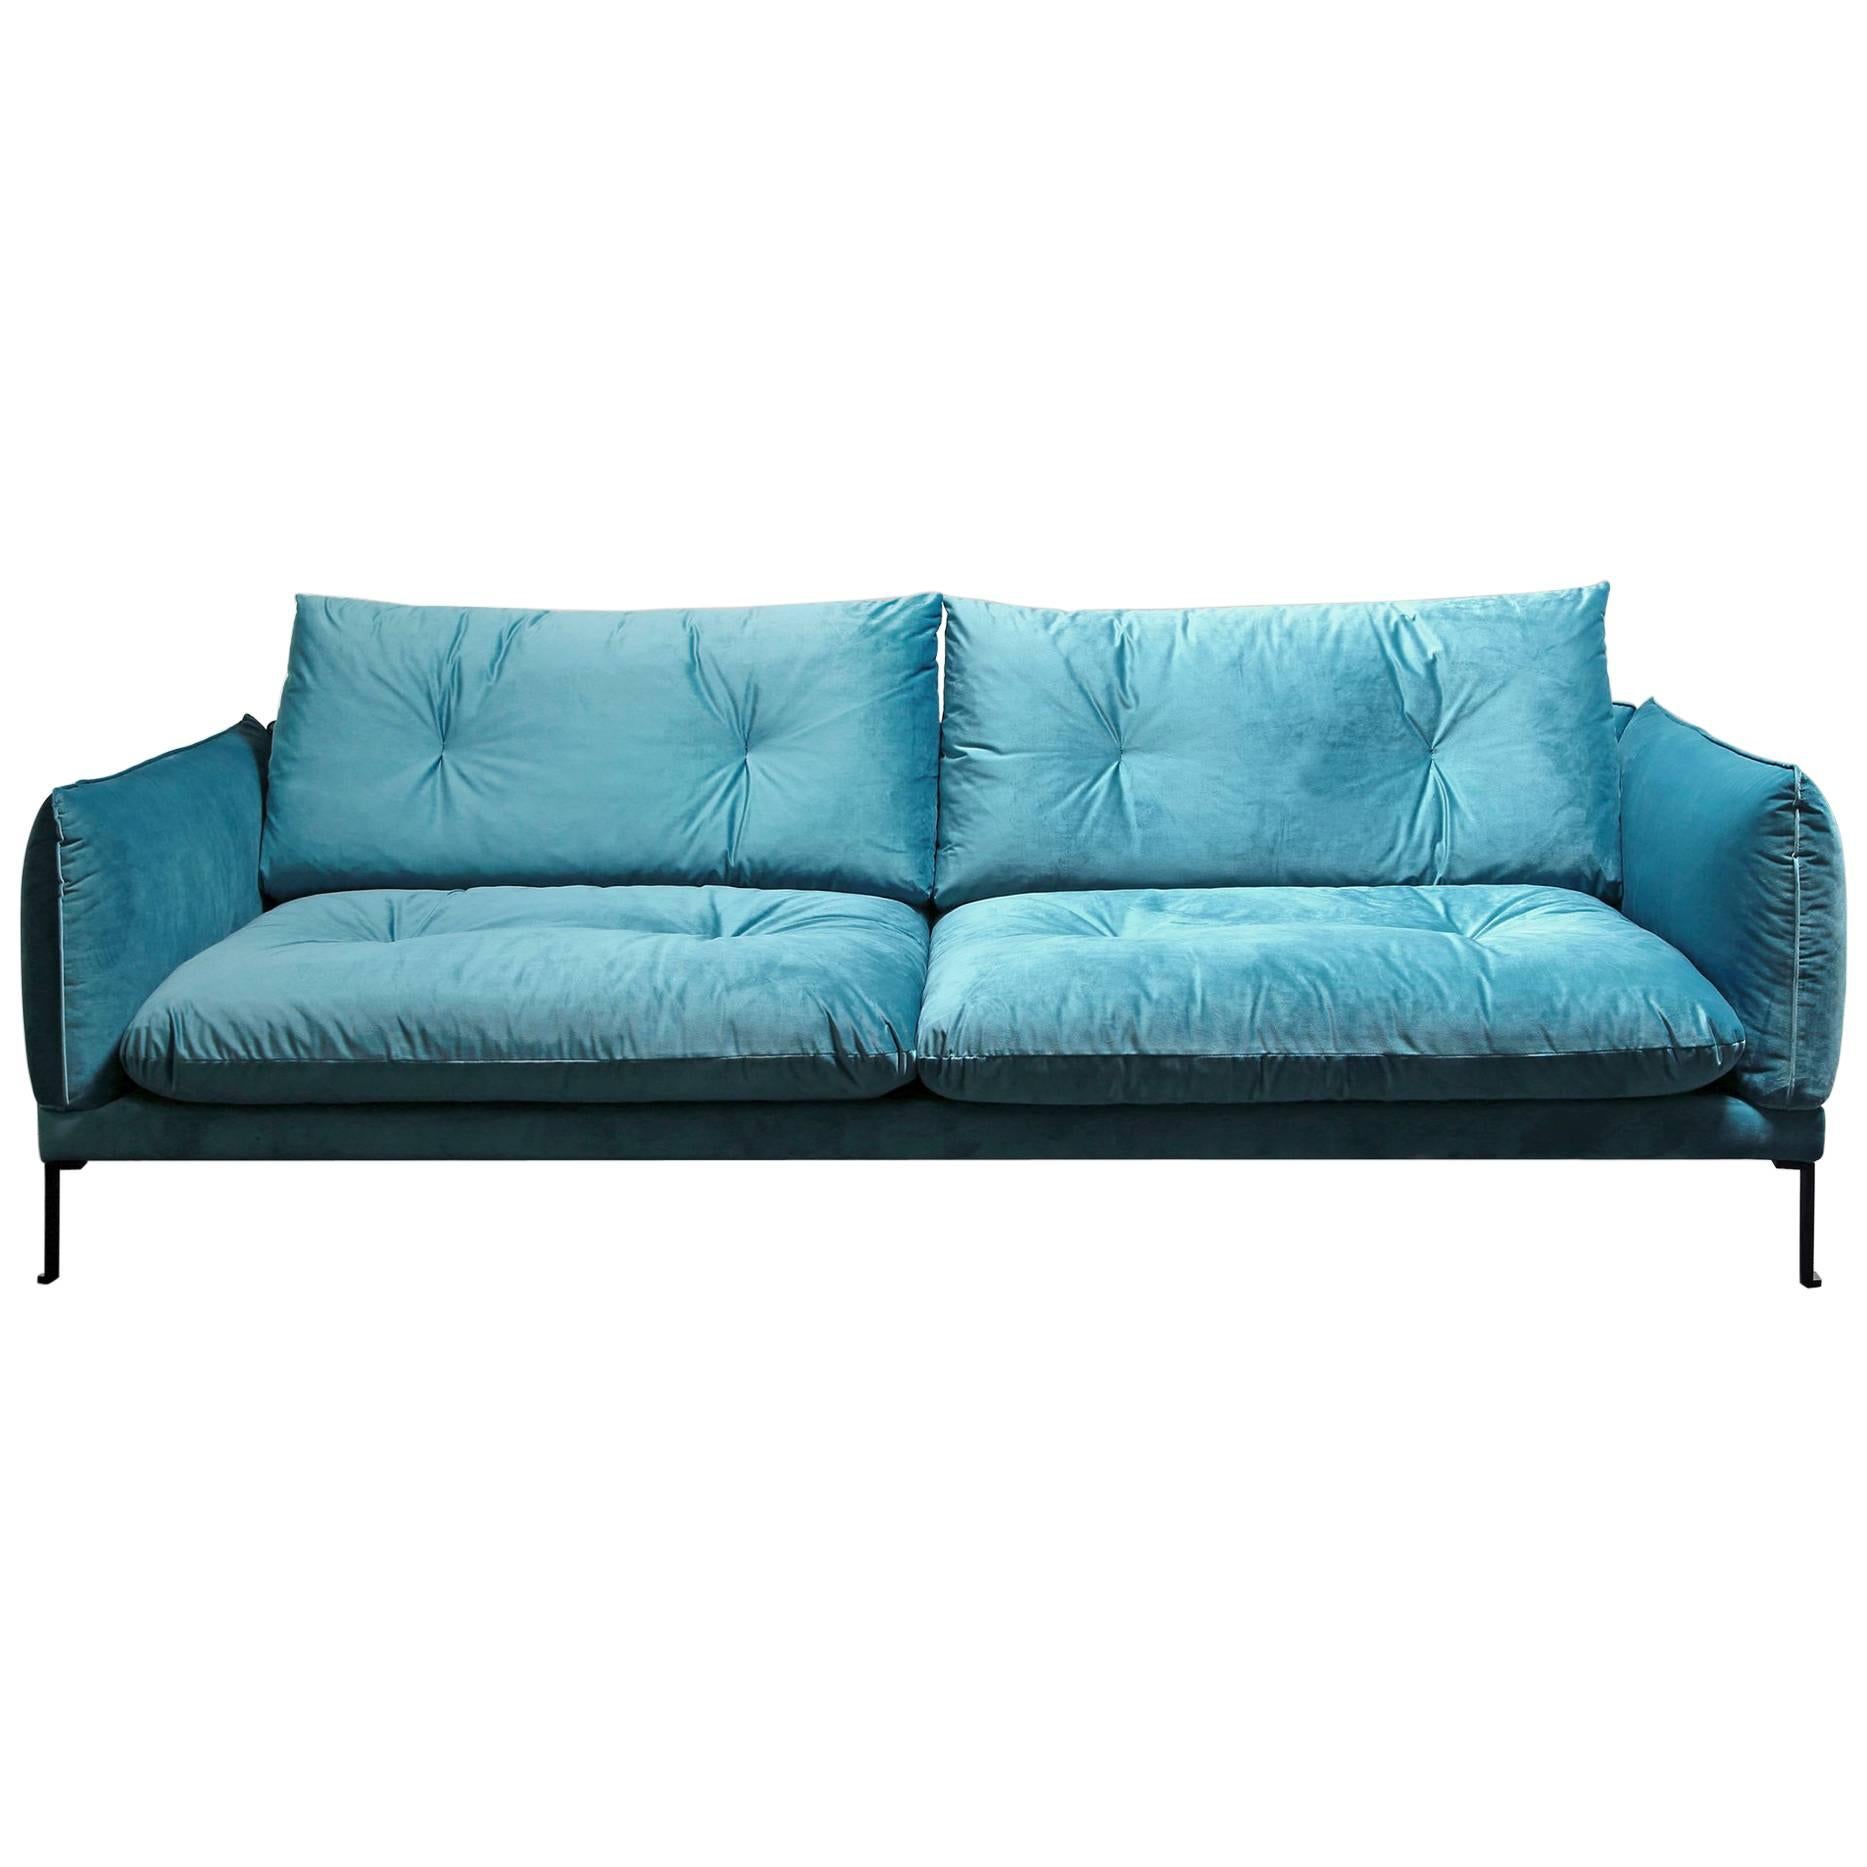 Santorini Handmade Contemporary Sofa, Tufted Cushions, Fabric Cover, Metal Legs For Sale